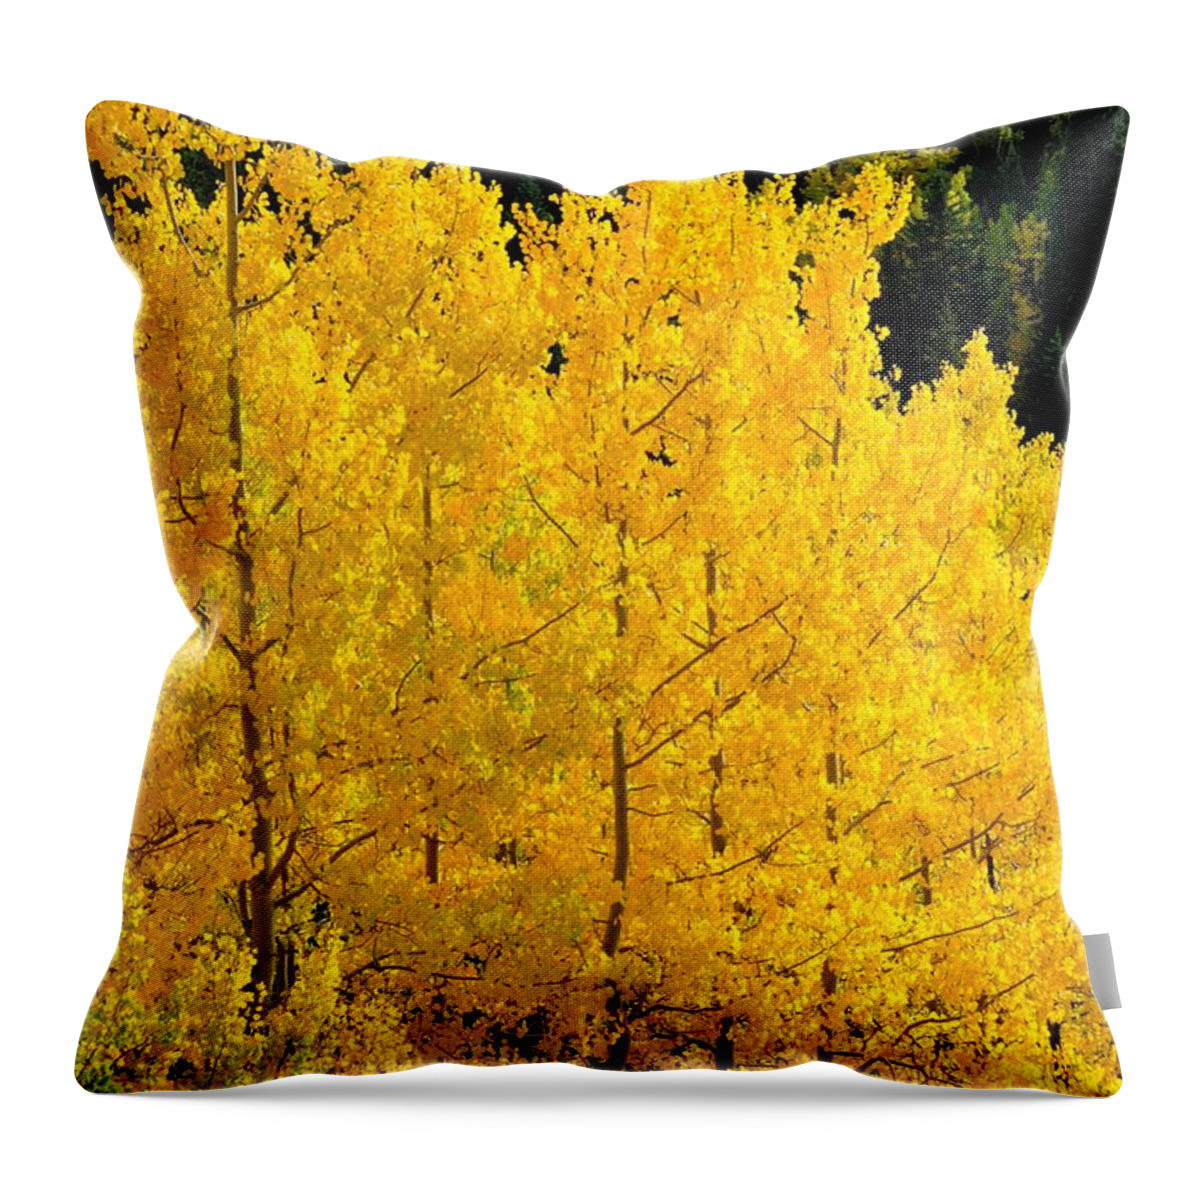 Colorado Throw Pillow featuring the photograph Golden Yellow Aspens by Marilyn Burton